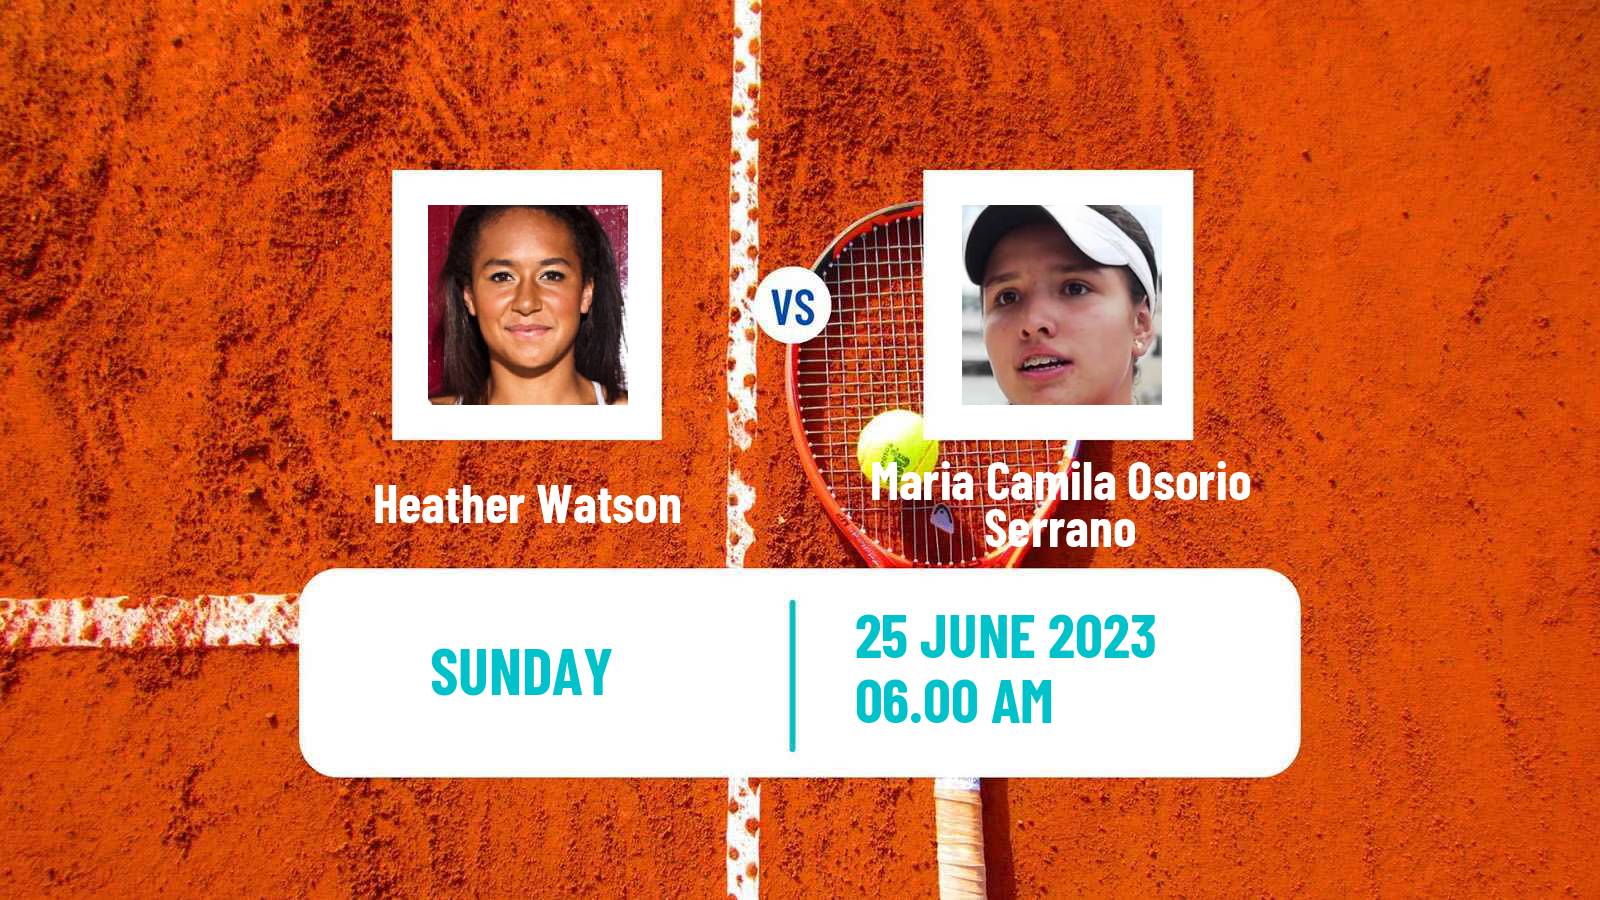 Tennis WTA Eastbourne Heather Watson - Maria Camila Osorio Serrano